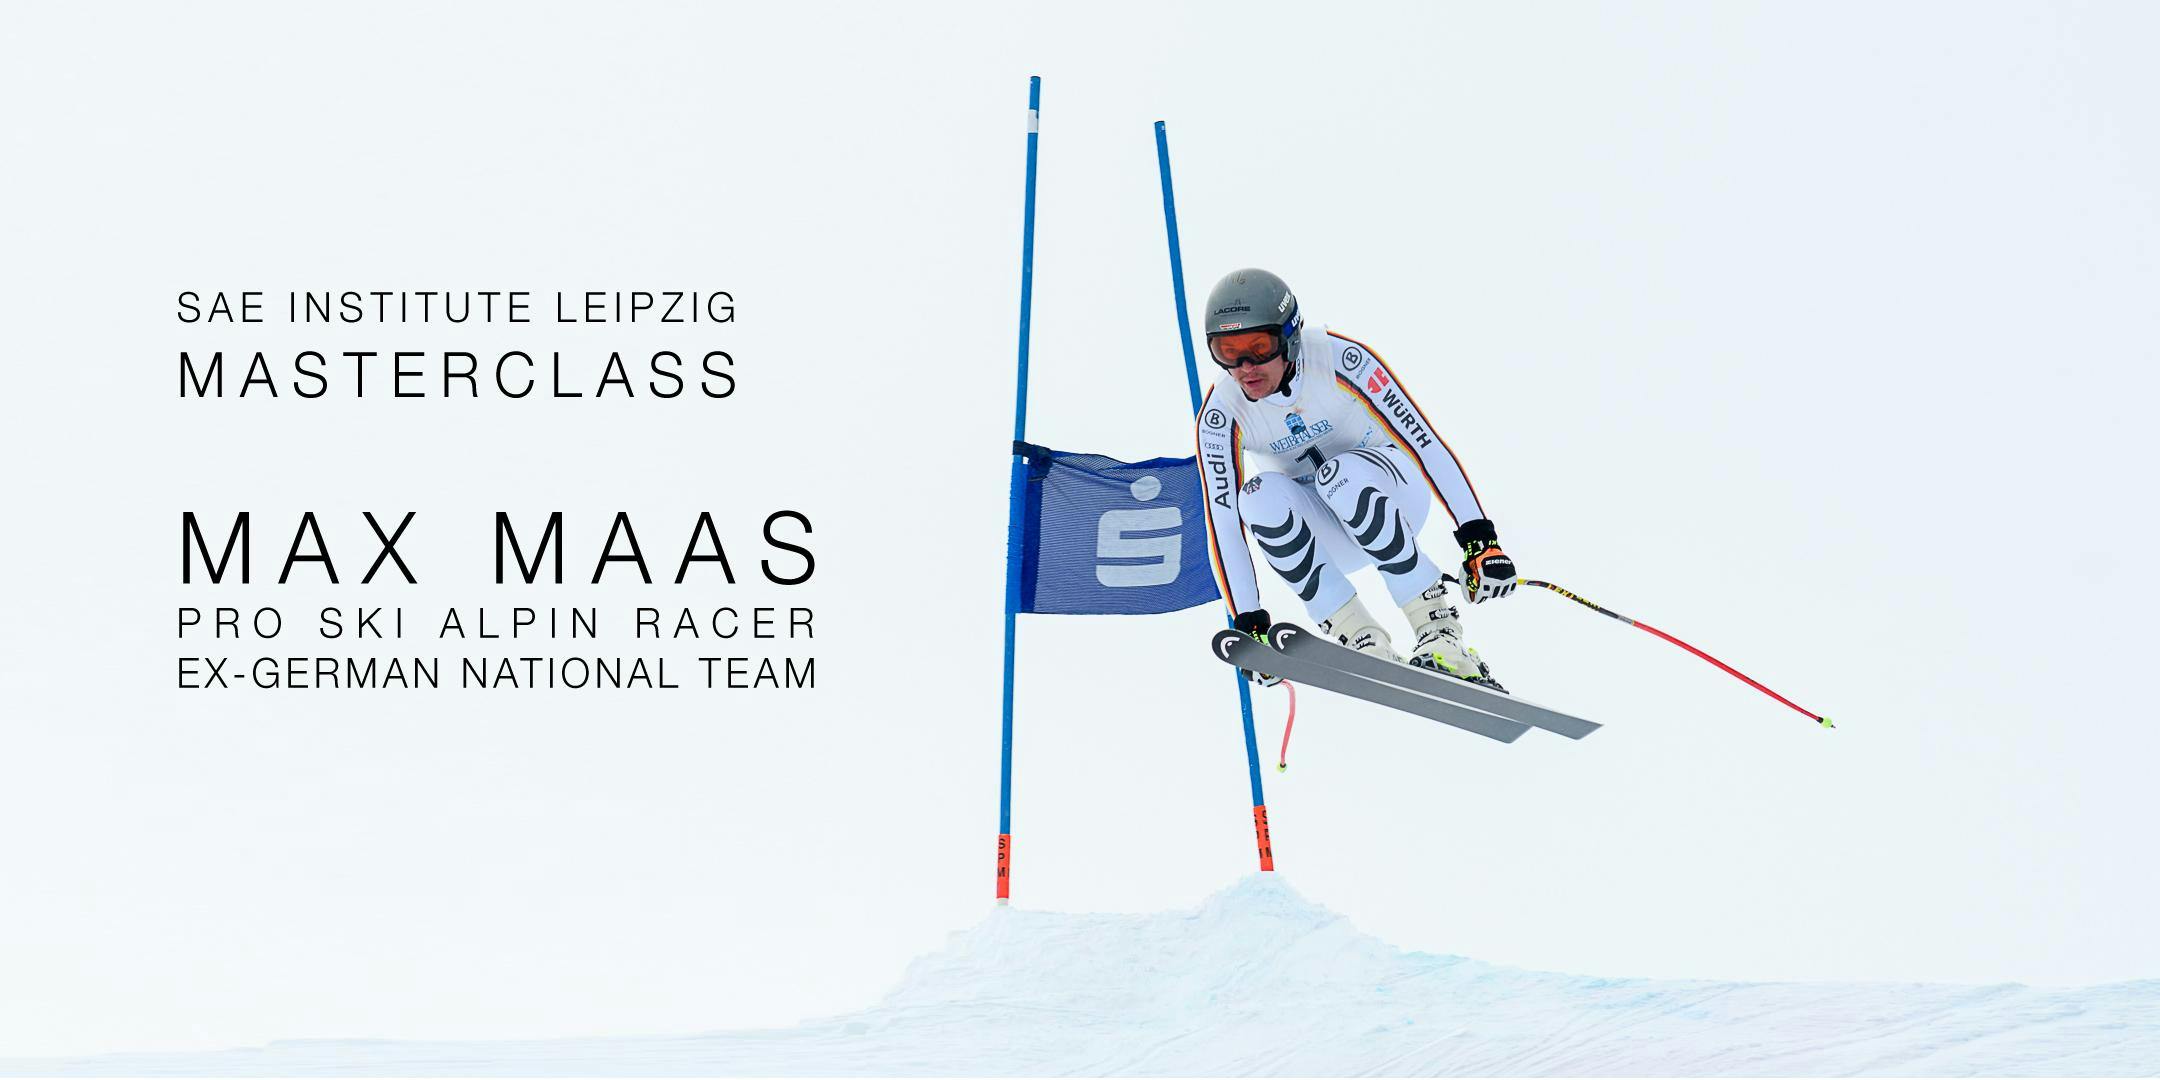 Masterclass - Max Maas / Ski Alpin - The Streif Kitzbühel meets SAE Leipzig